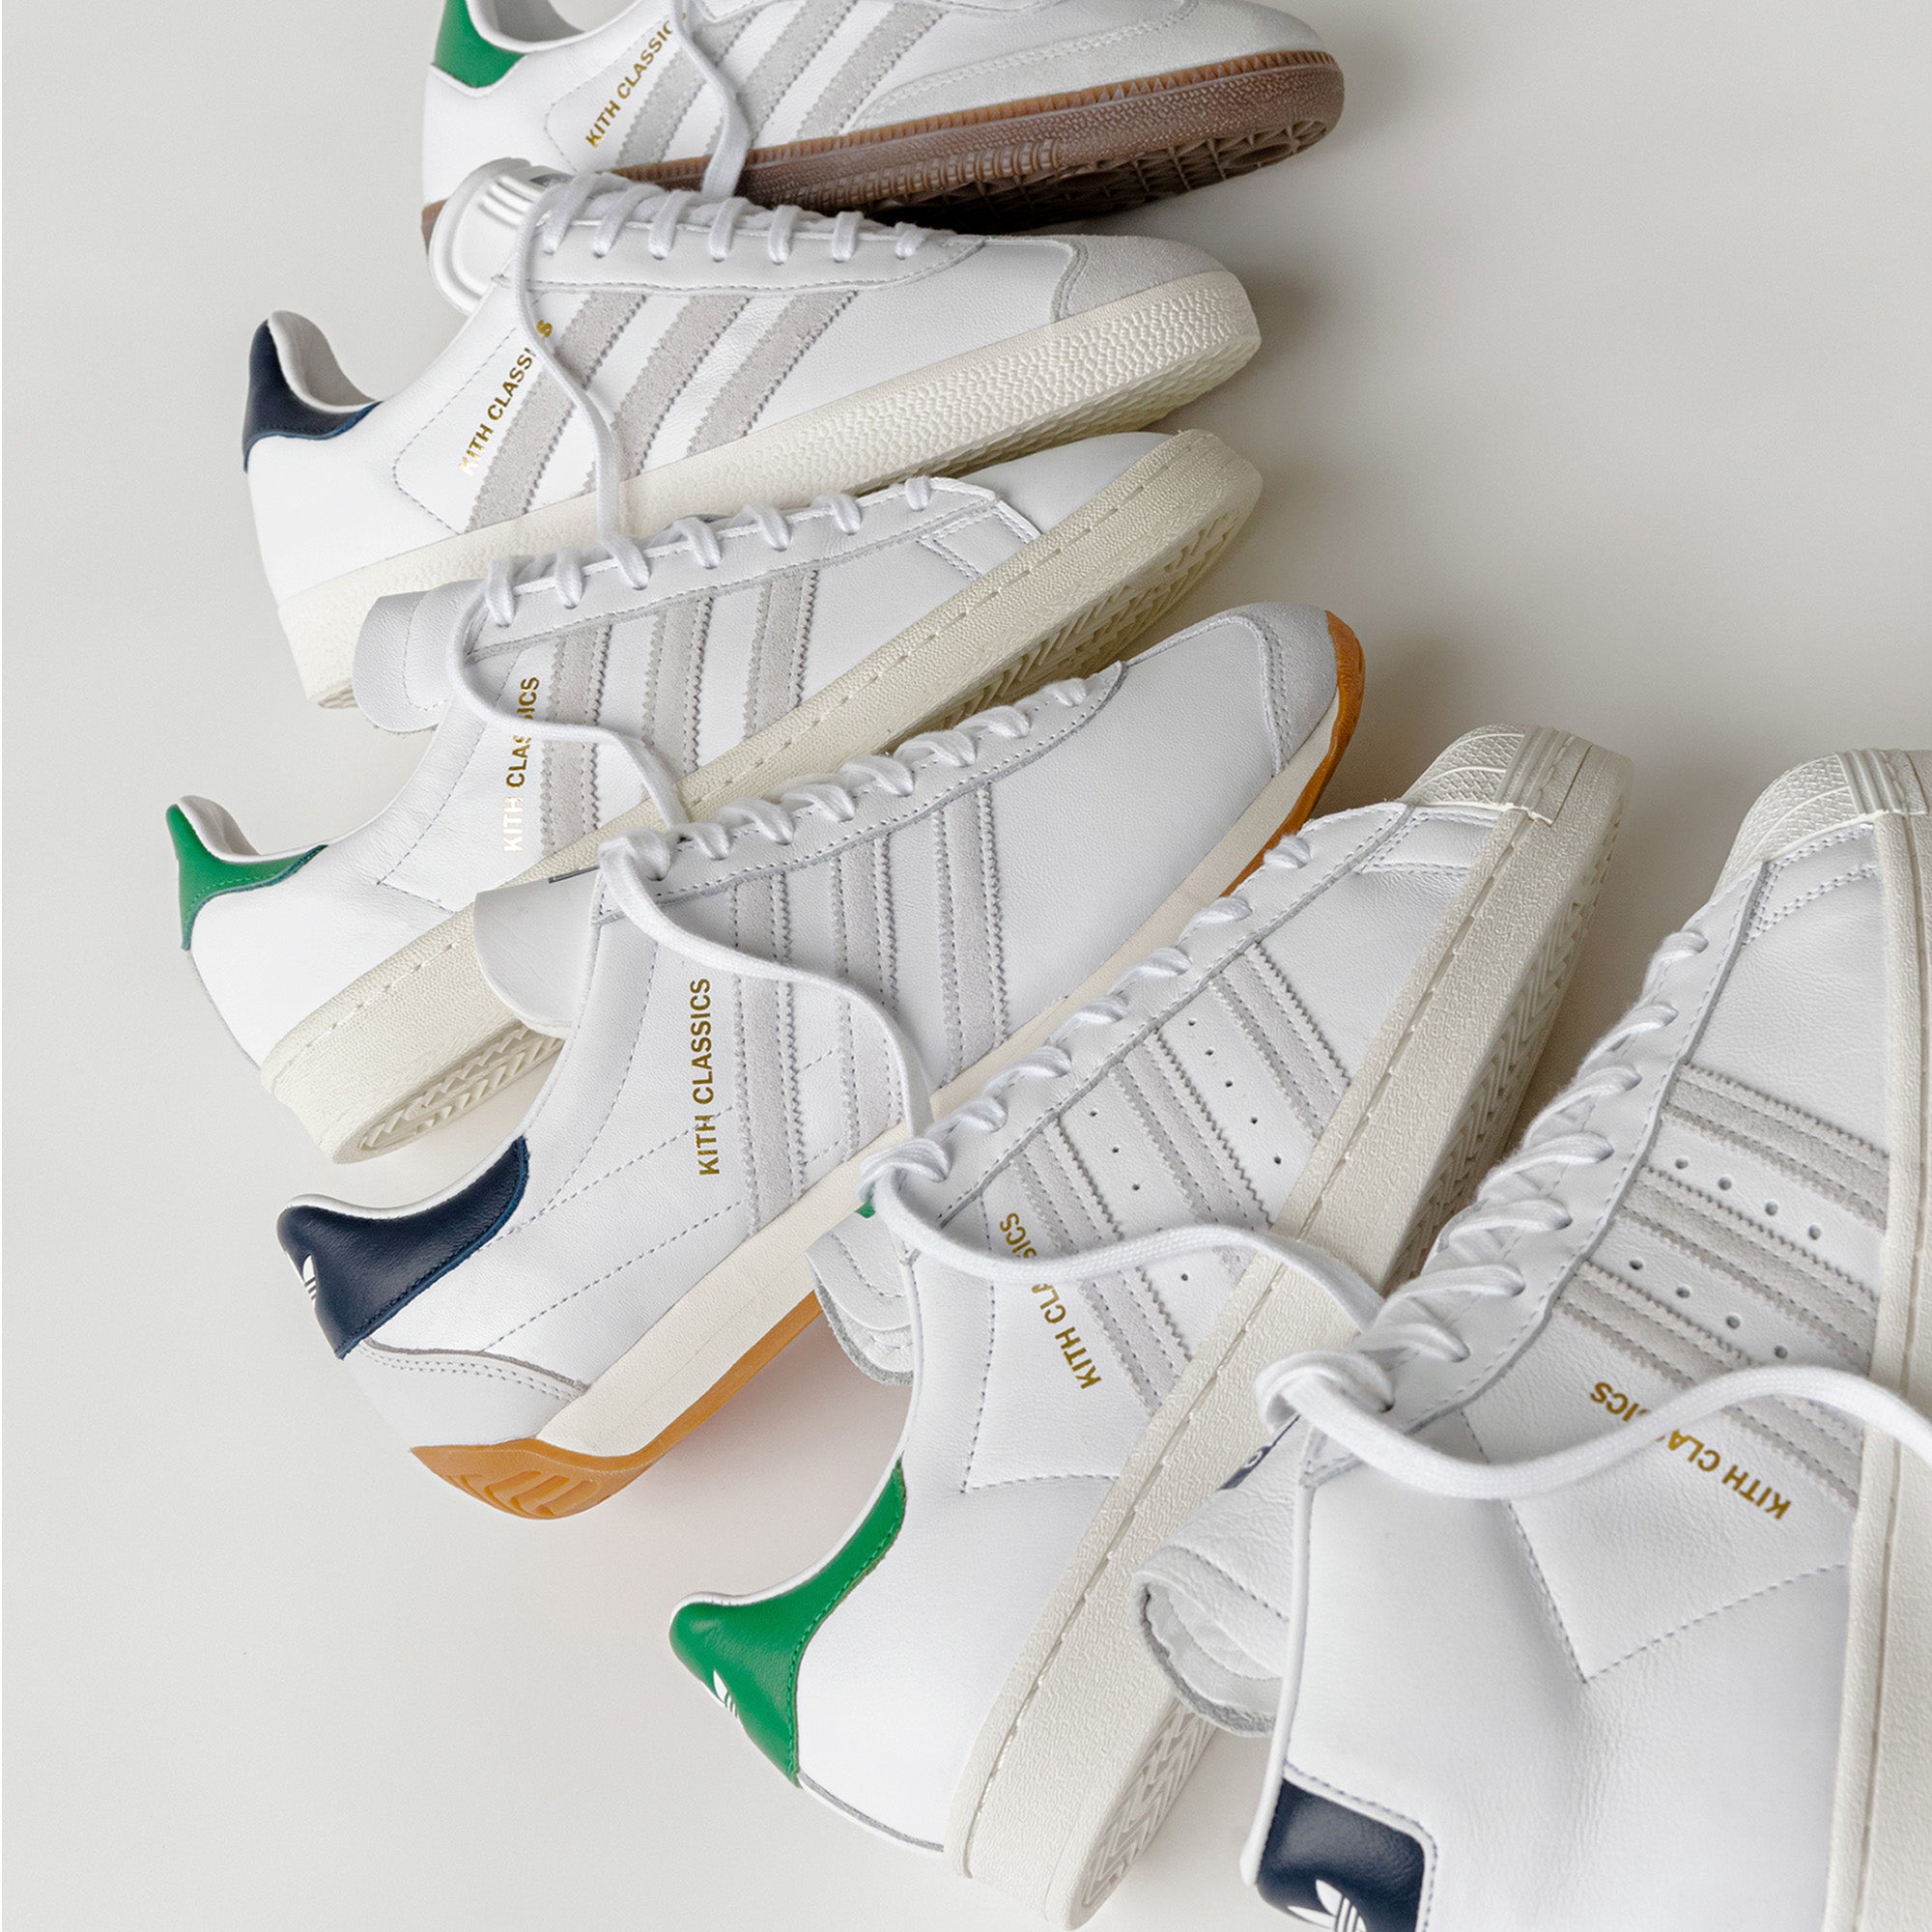 Adidas Classics: Shoes & Apparel | Kith Classics Program